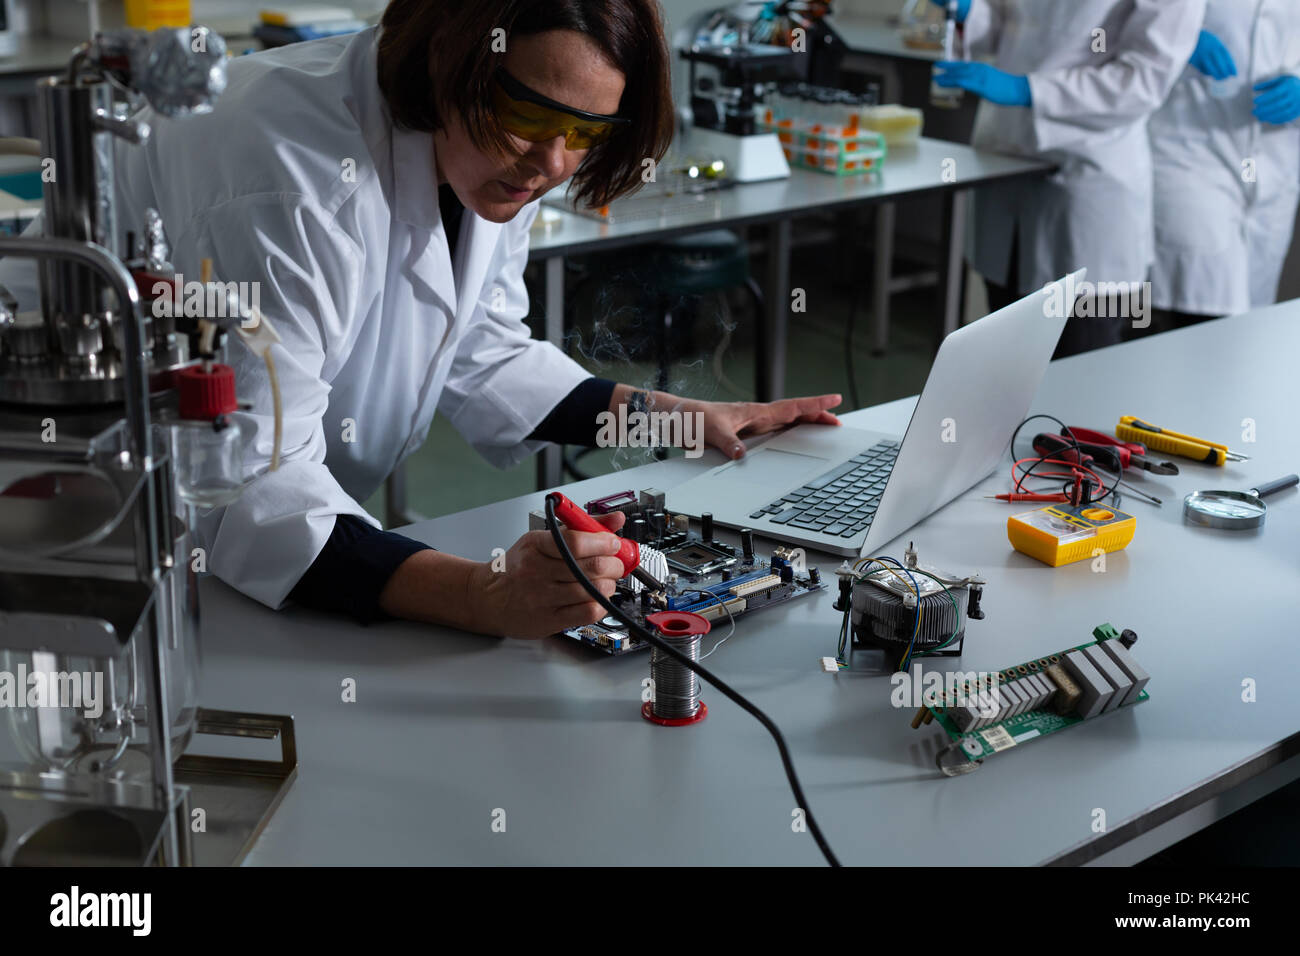 Female scientist soldering circuit board Stock Photo